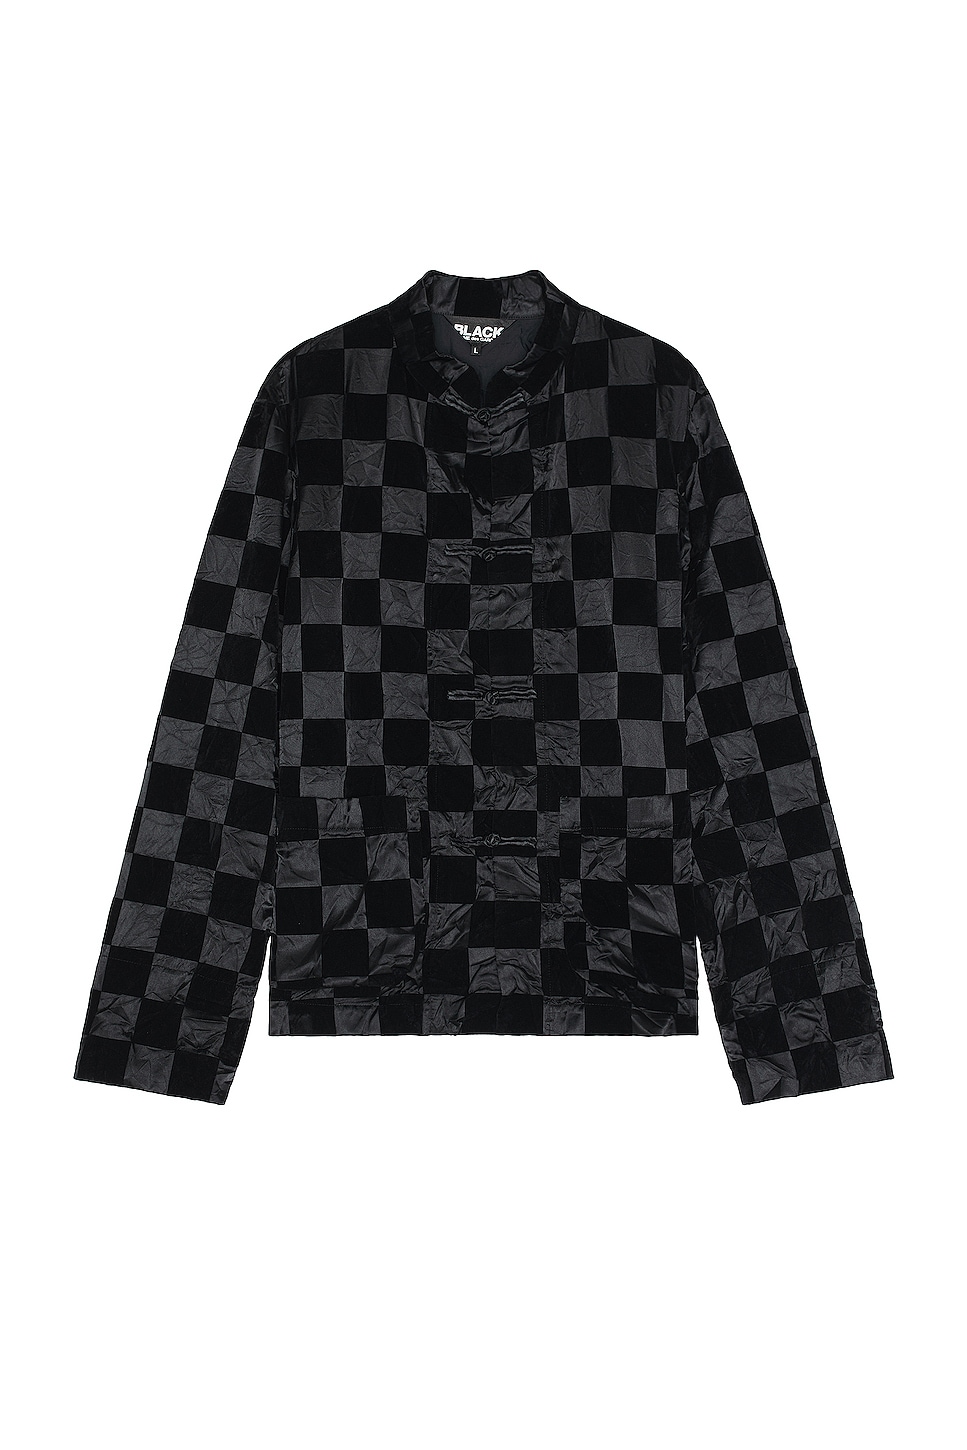 Checkered Flock Jacket in Black